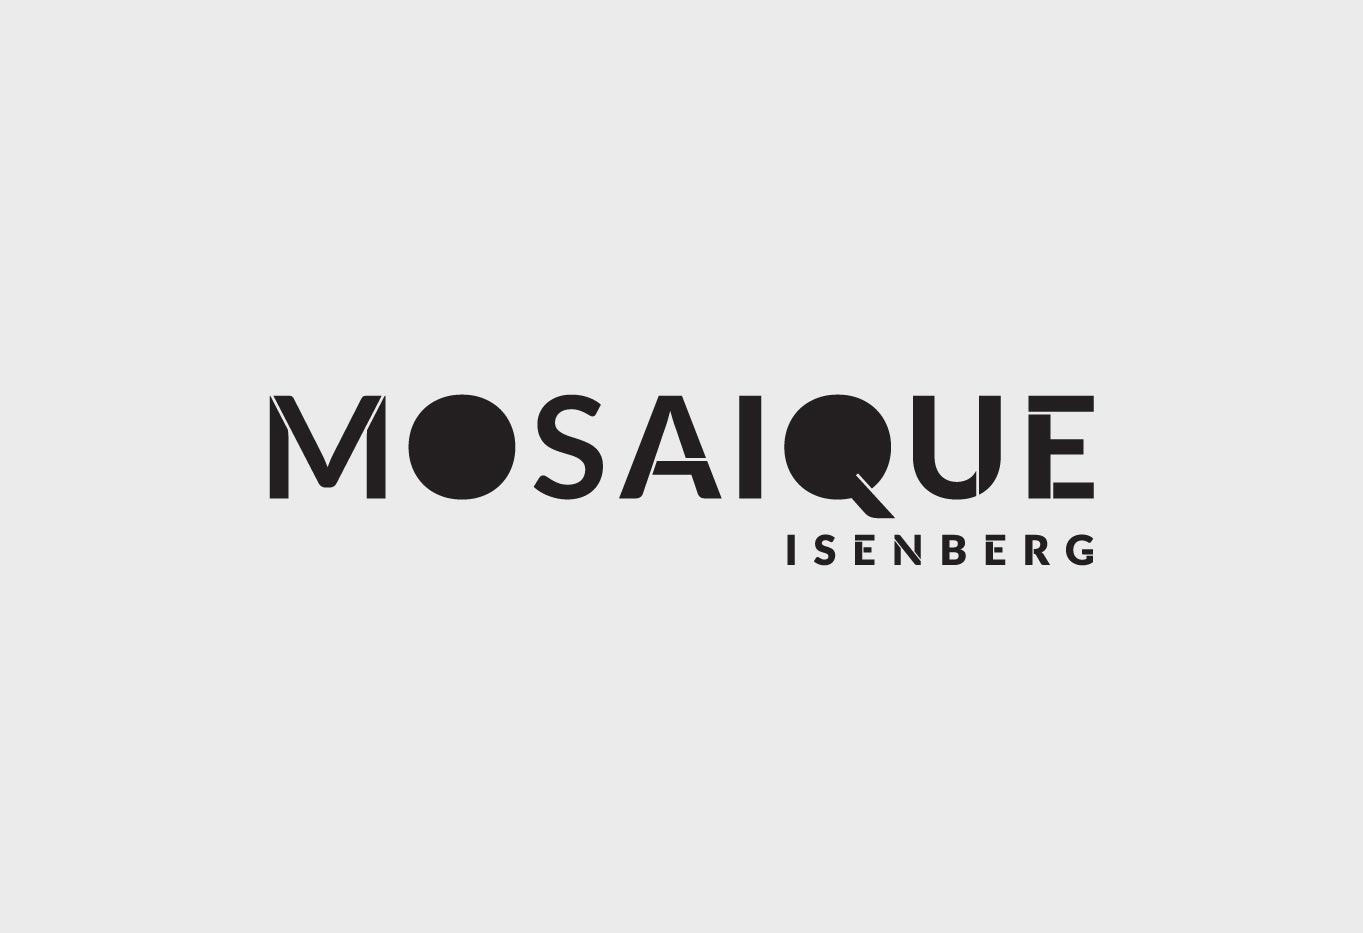 Branding, print, packaging design for Mosaique